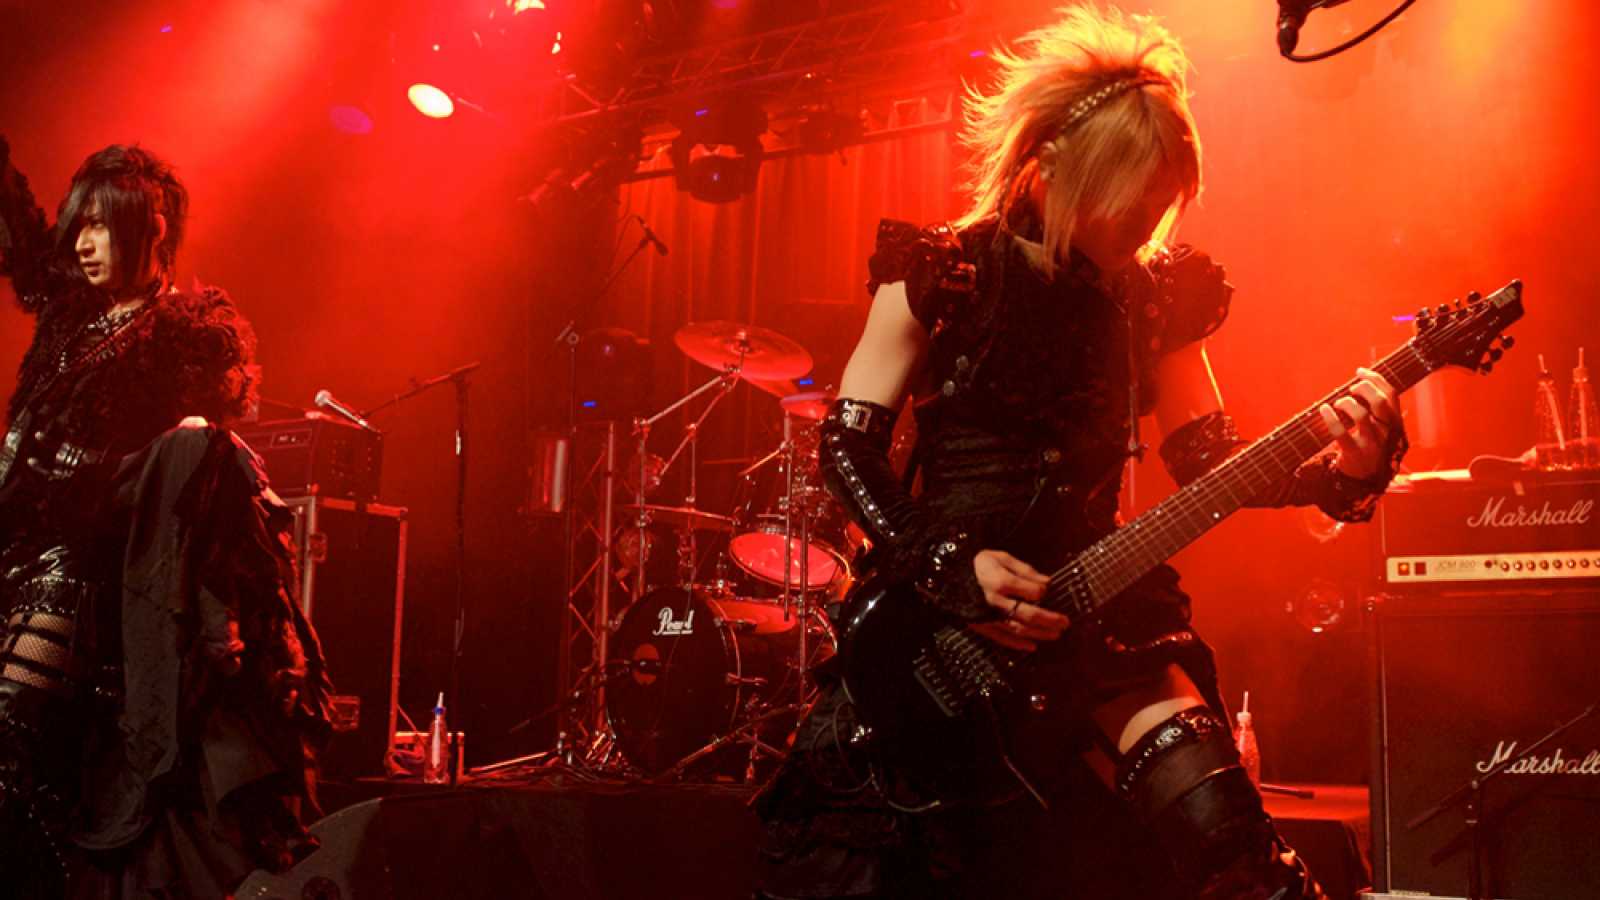 D - LIVE TOUR 2012 - Dying message-world tour, Gloria, Helsinki © JaME Suomi, Anna Nikkinen